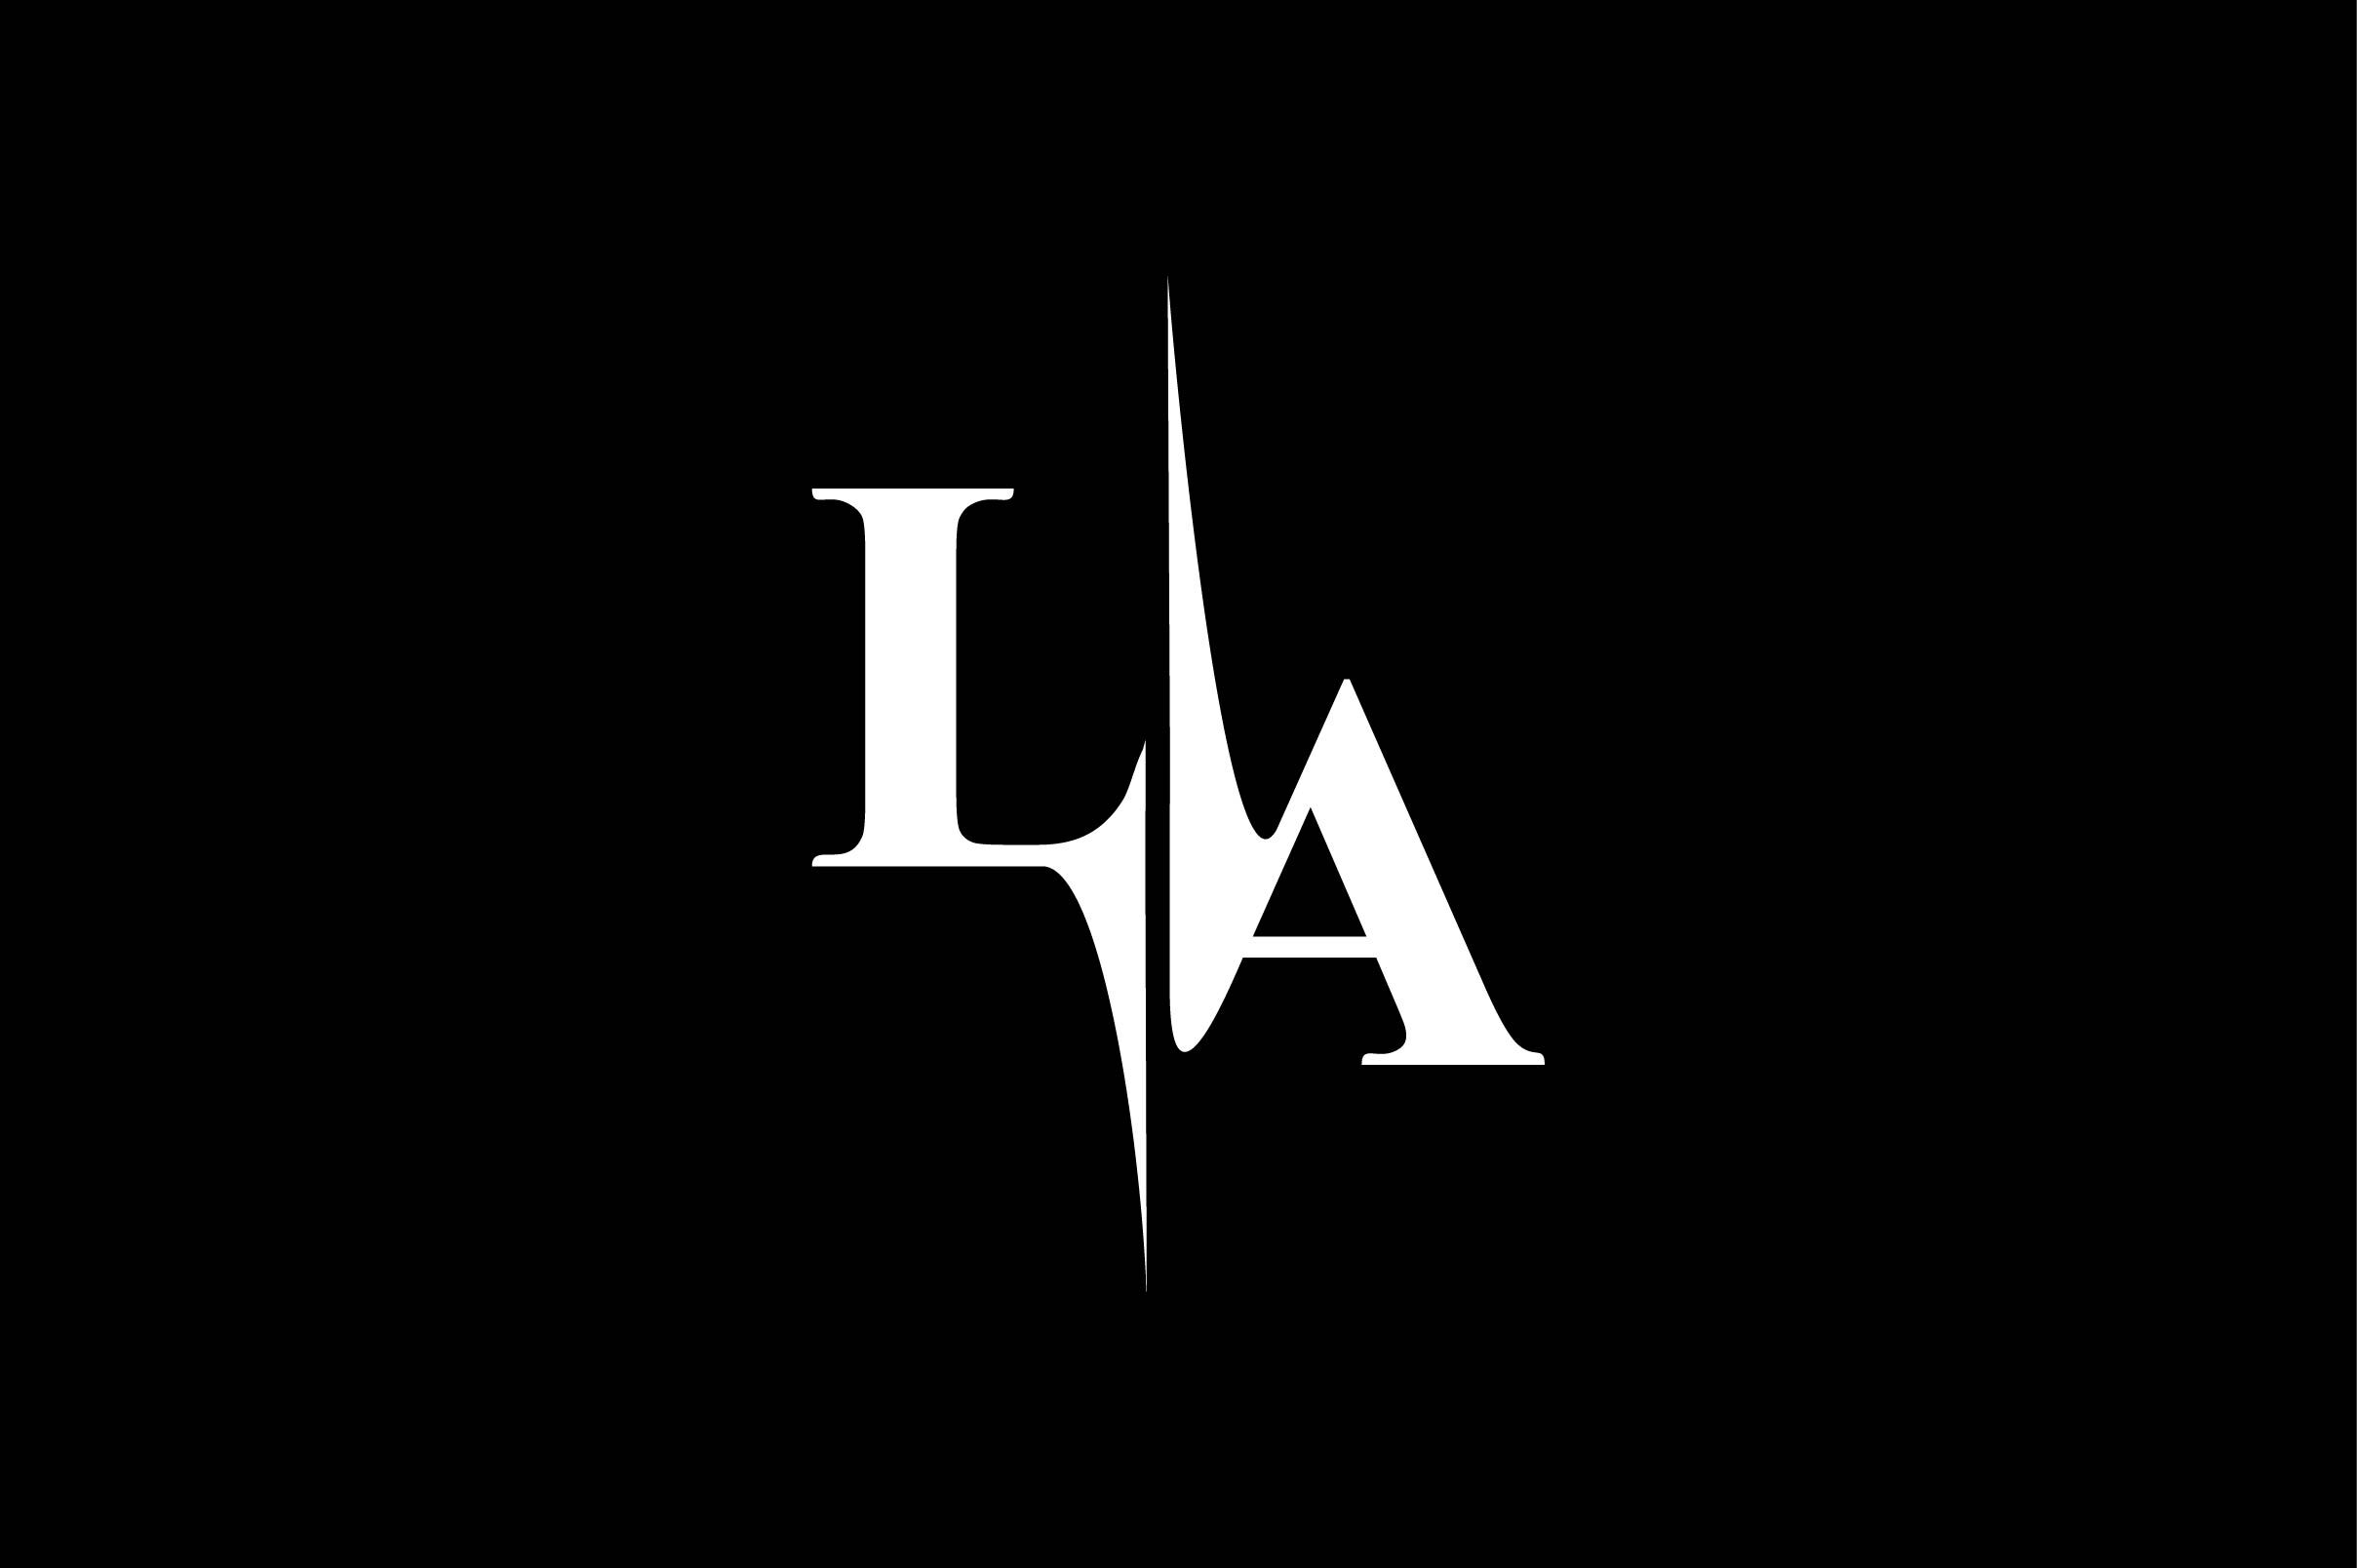 LY Monogram Logo V5 By Vectorseller